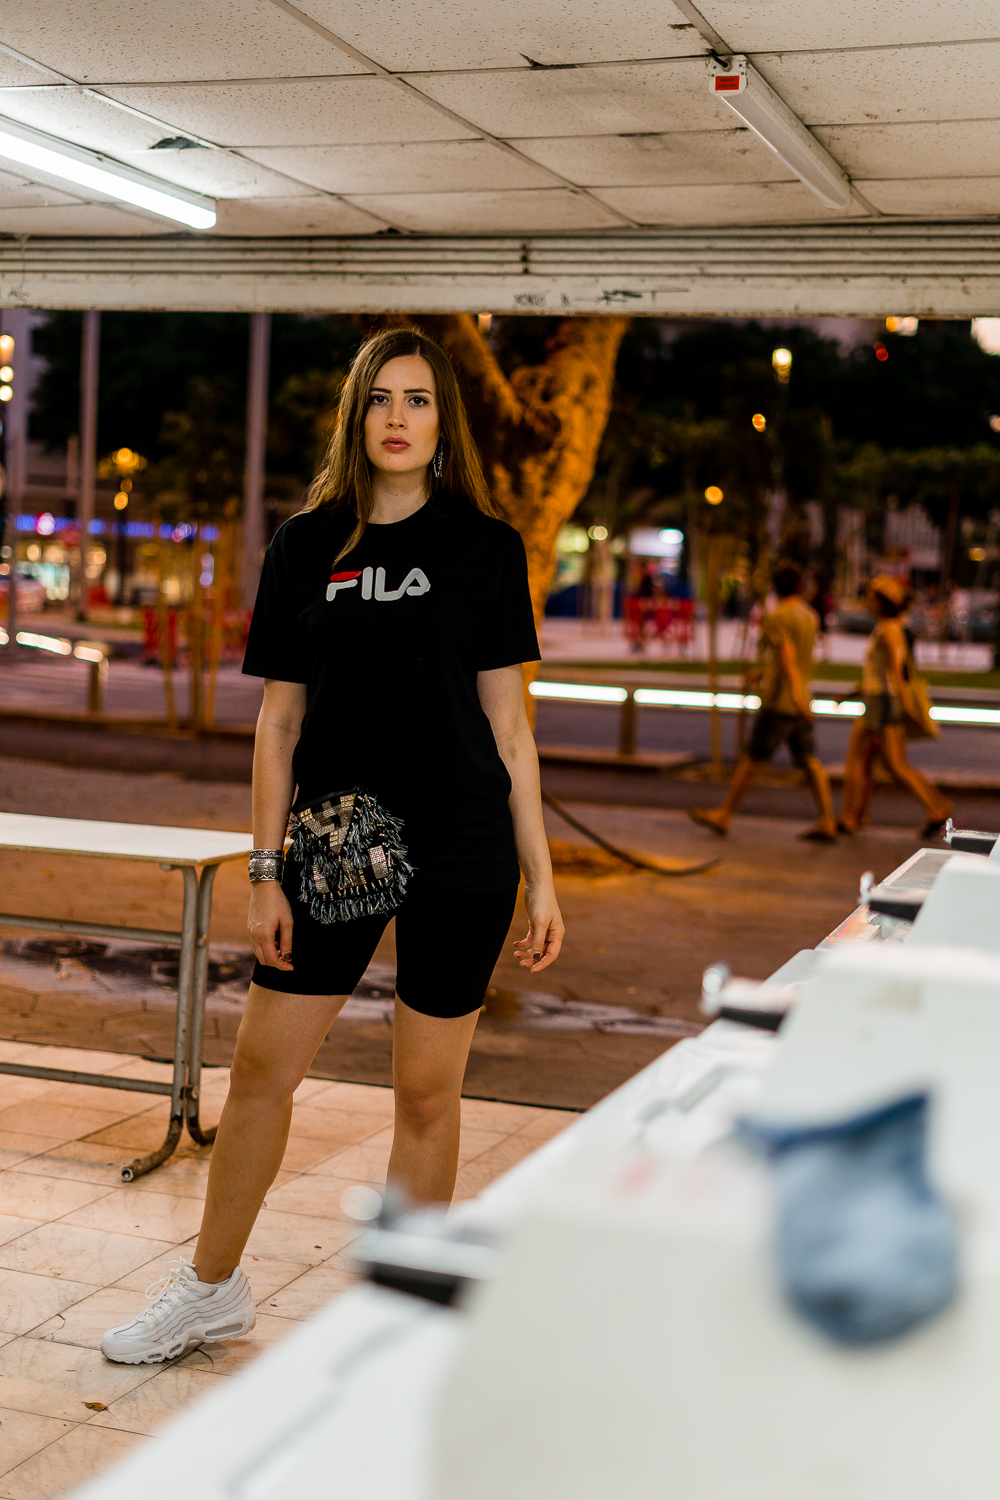 Radlerhose ist zurück-Verrückte Modetrends 2018-Fila Shirt-Chunky Sneaker-Nike Air Max 95-Modeblog-Tel Aviv-andysparkles